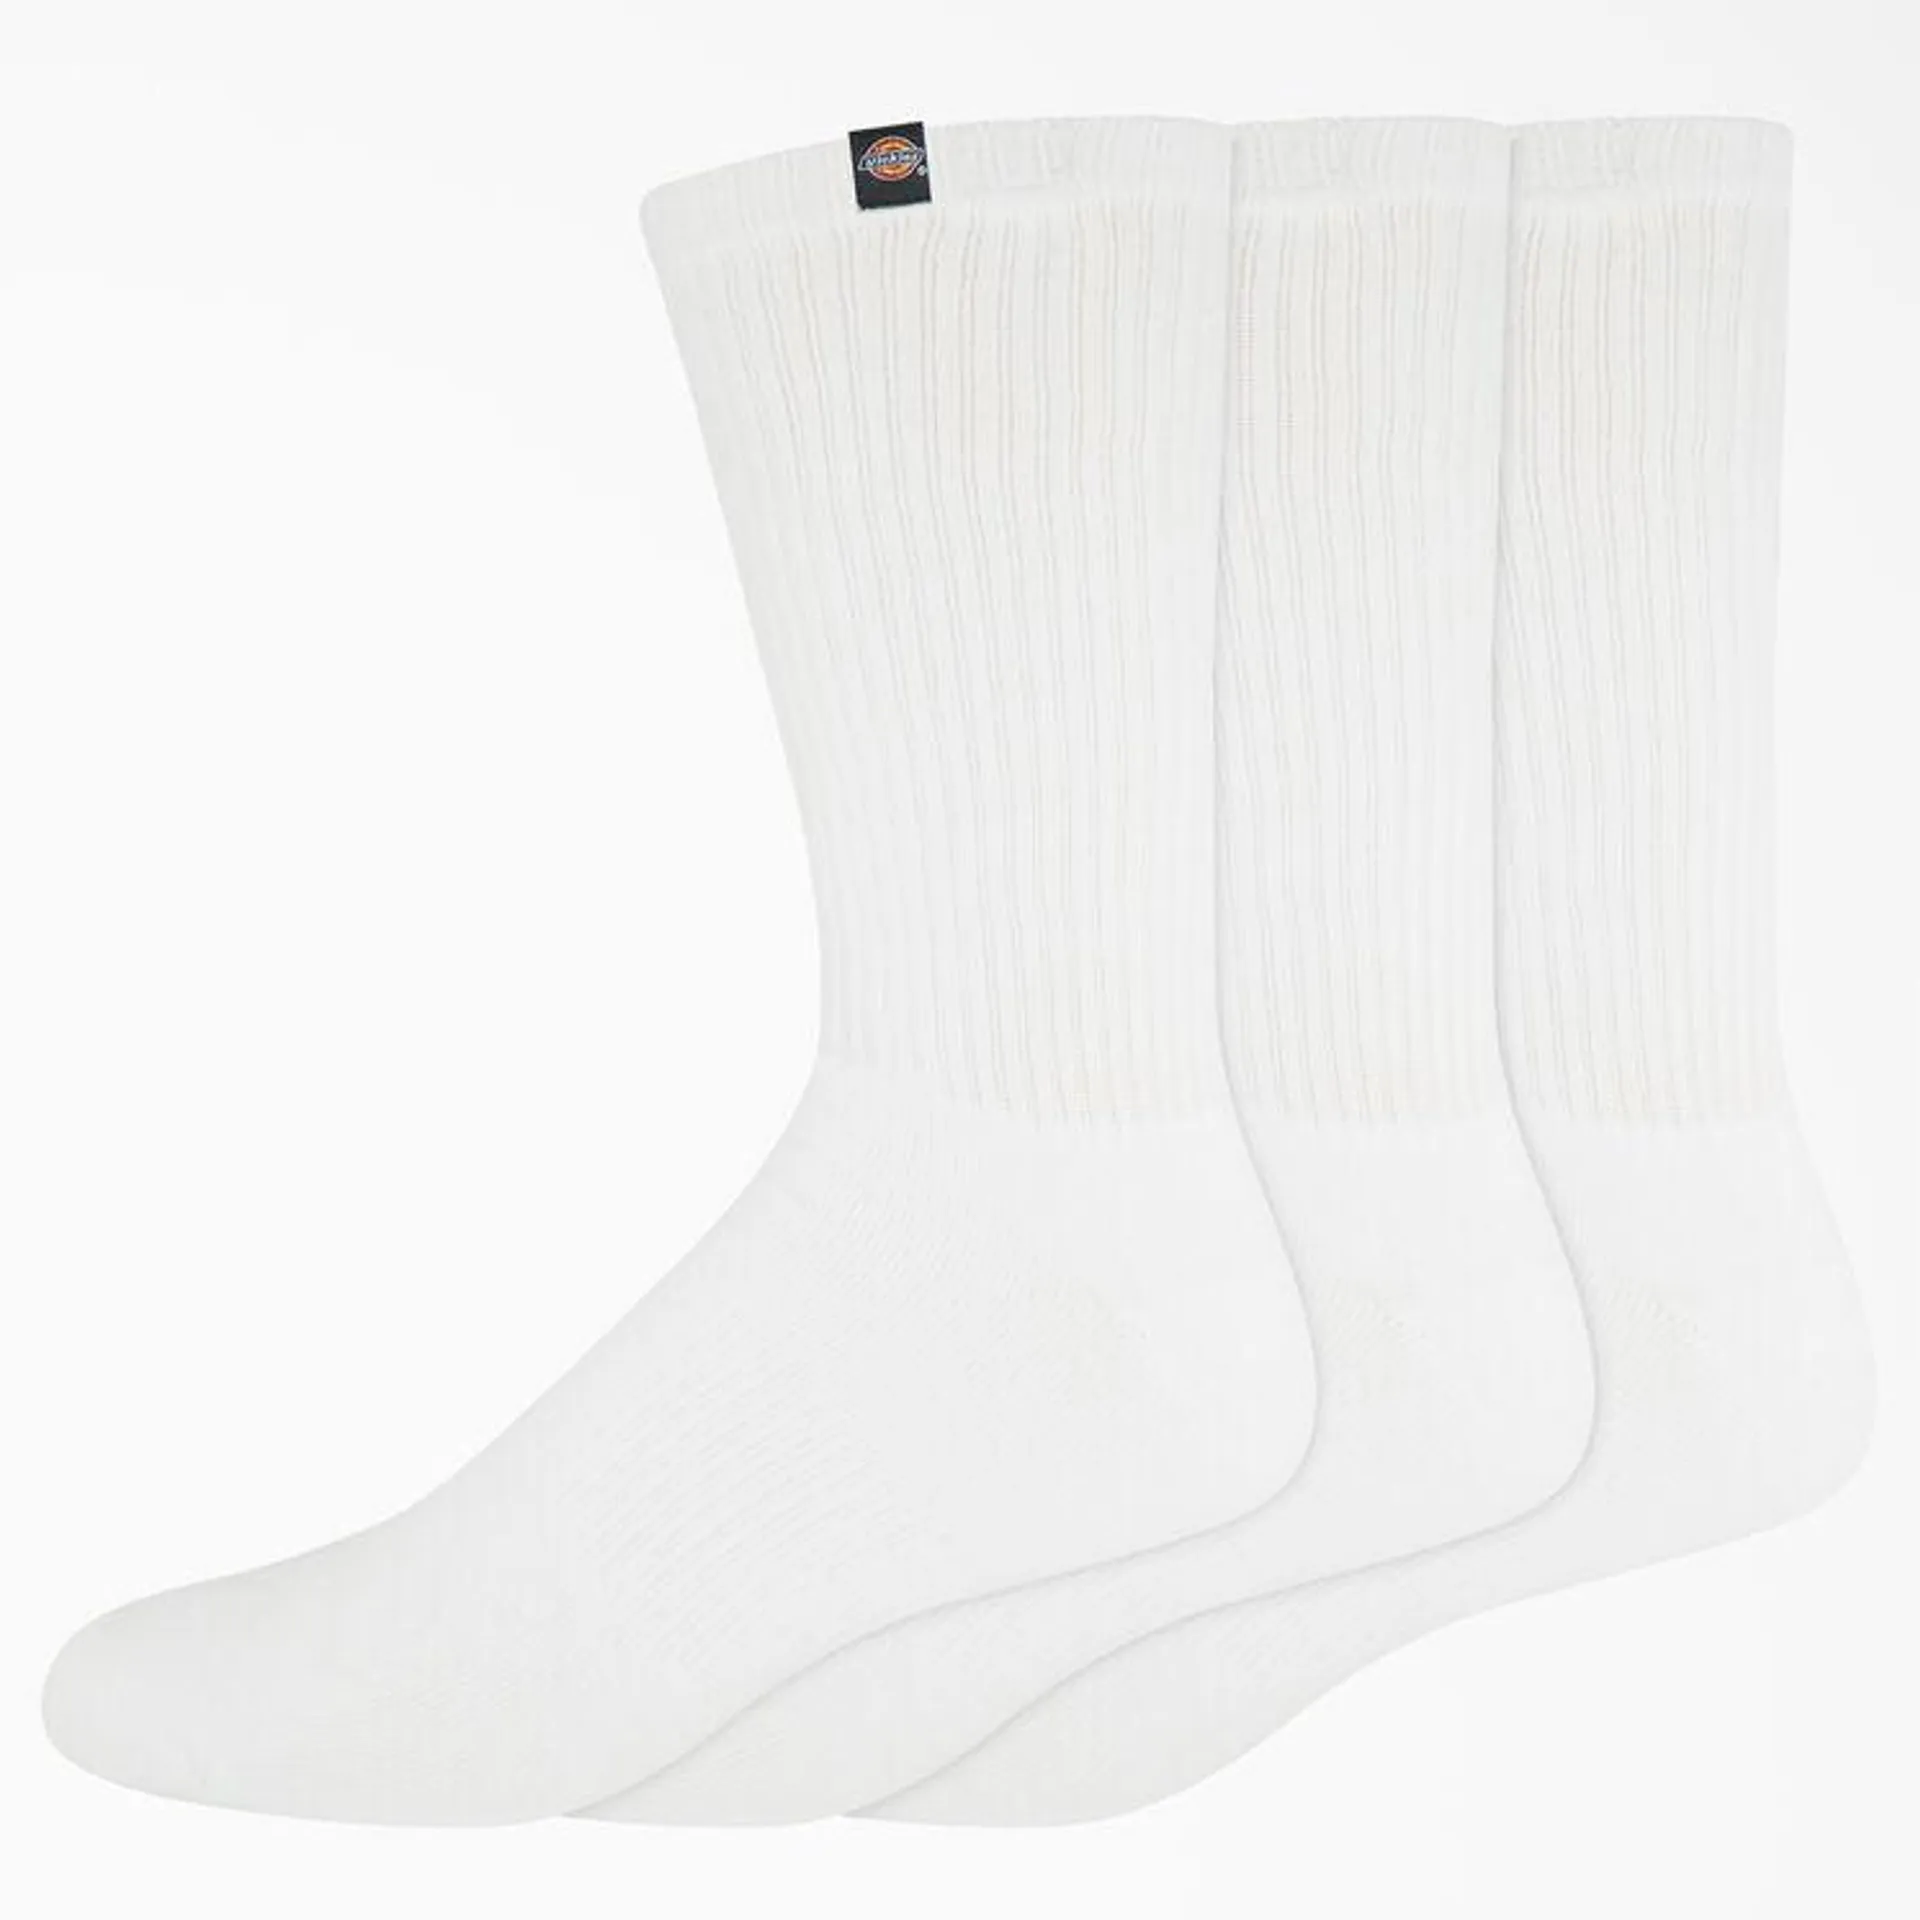 Dickies Label Crew Socks, Size 6-12, 3-Pack, White